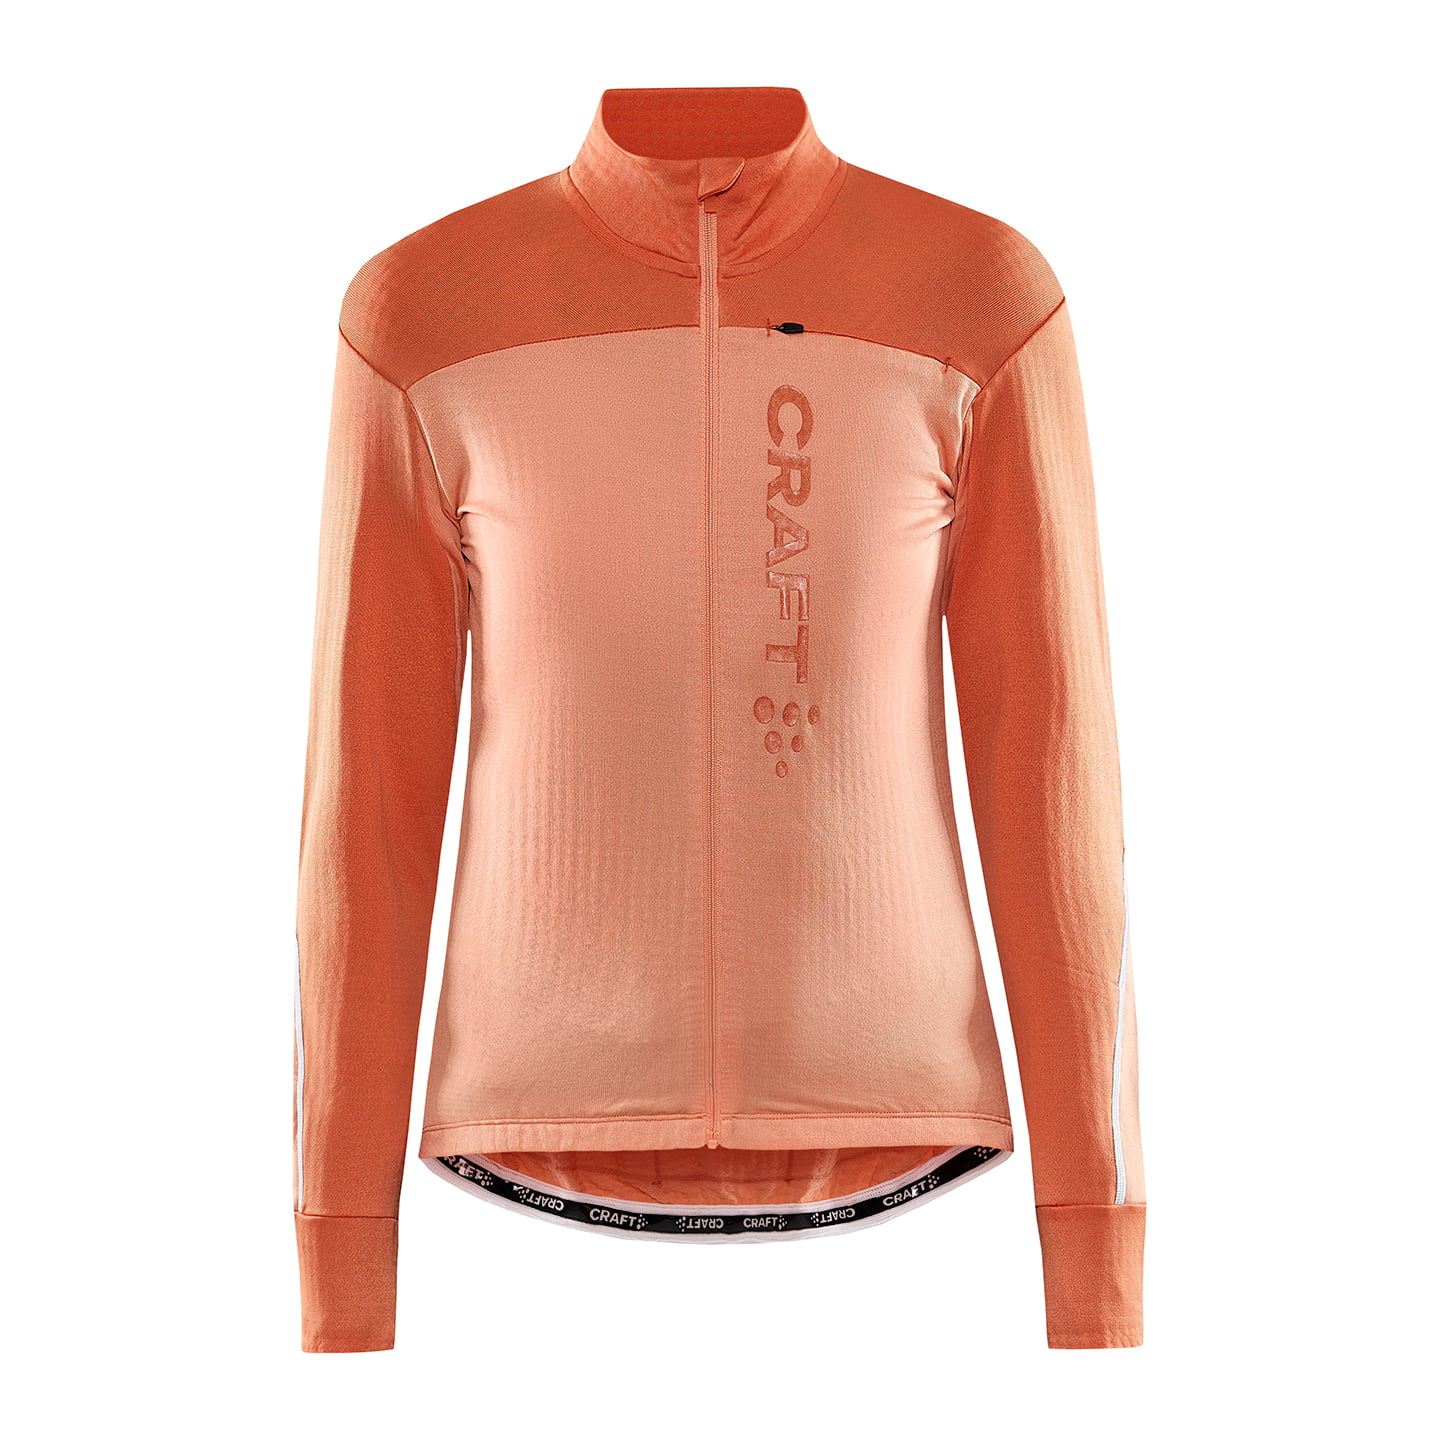 CRAFT CORE SubZ Women’s Long Sleeve Jersey Women’s Long Sleeve Jersey, size L, Cycling jersey, Cycling clothing